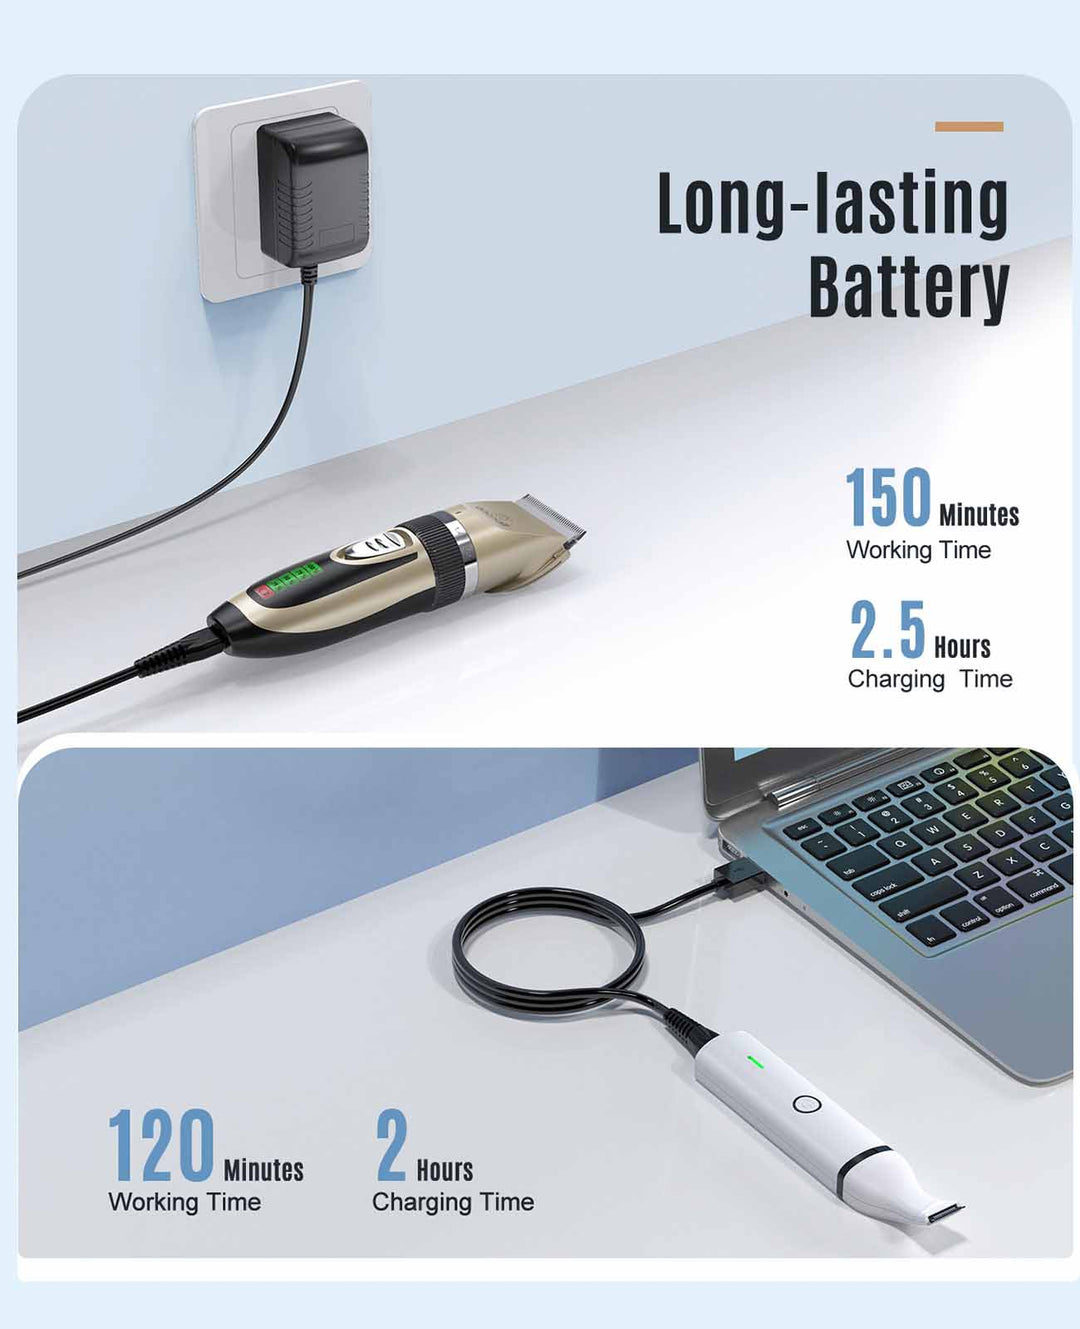 long-lasting battery